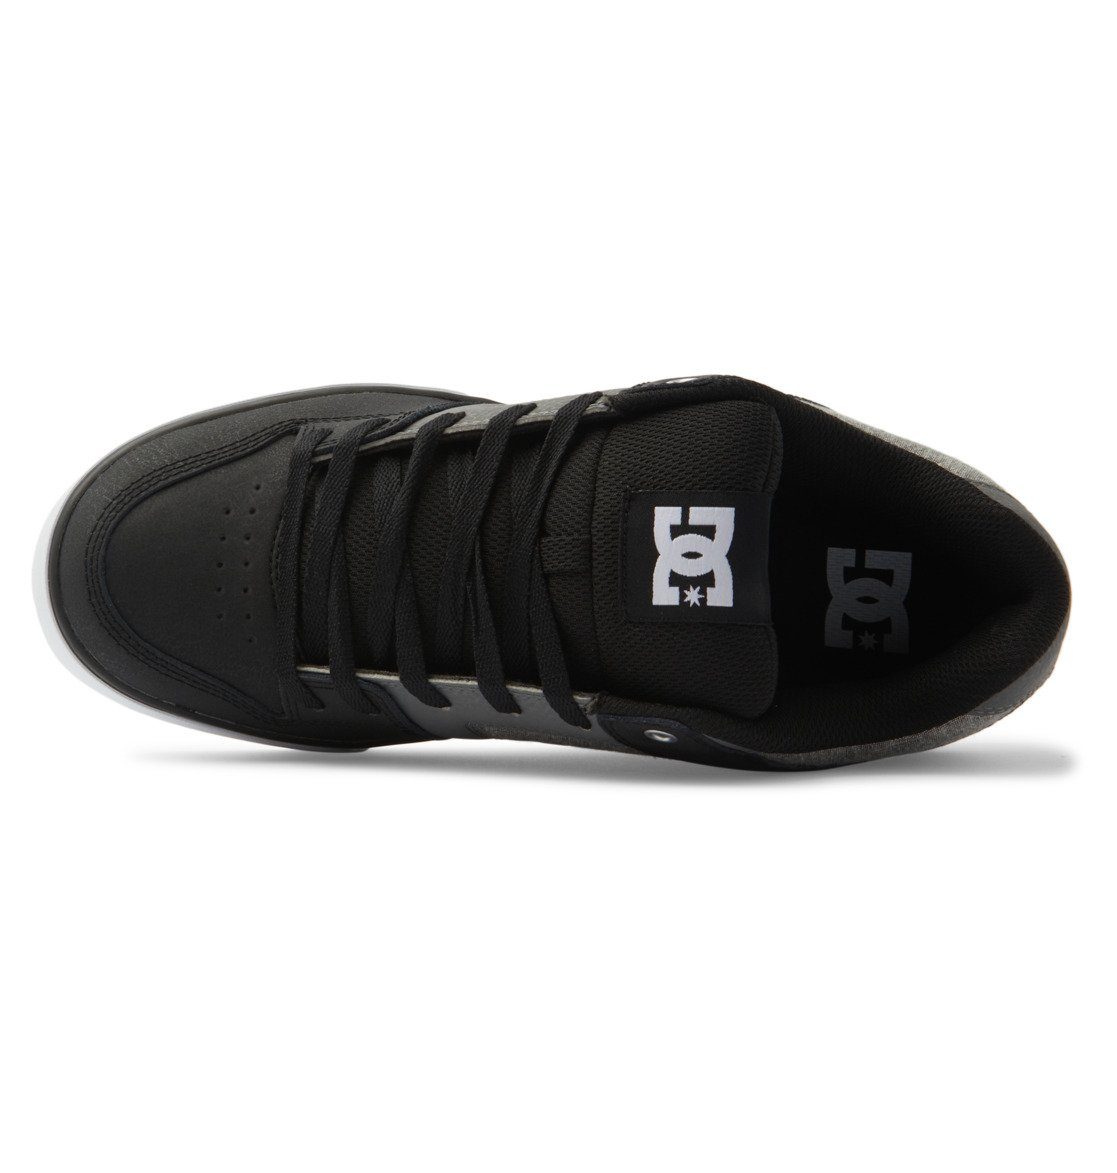 Black/White/Armor Pure DC Sneaker Shoes